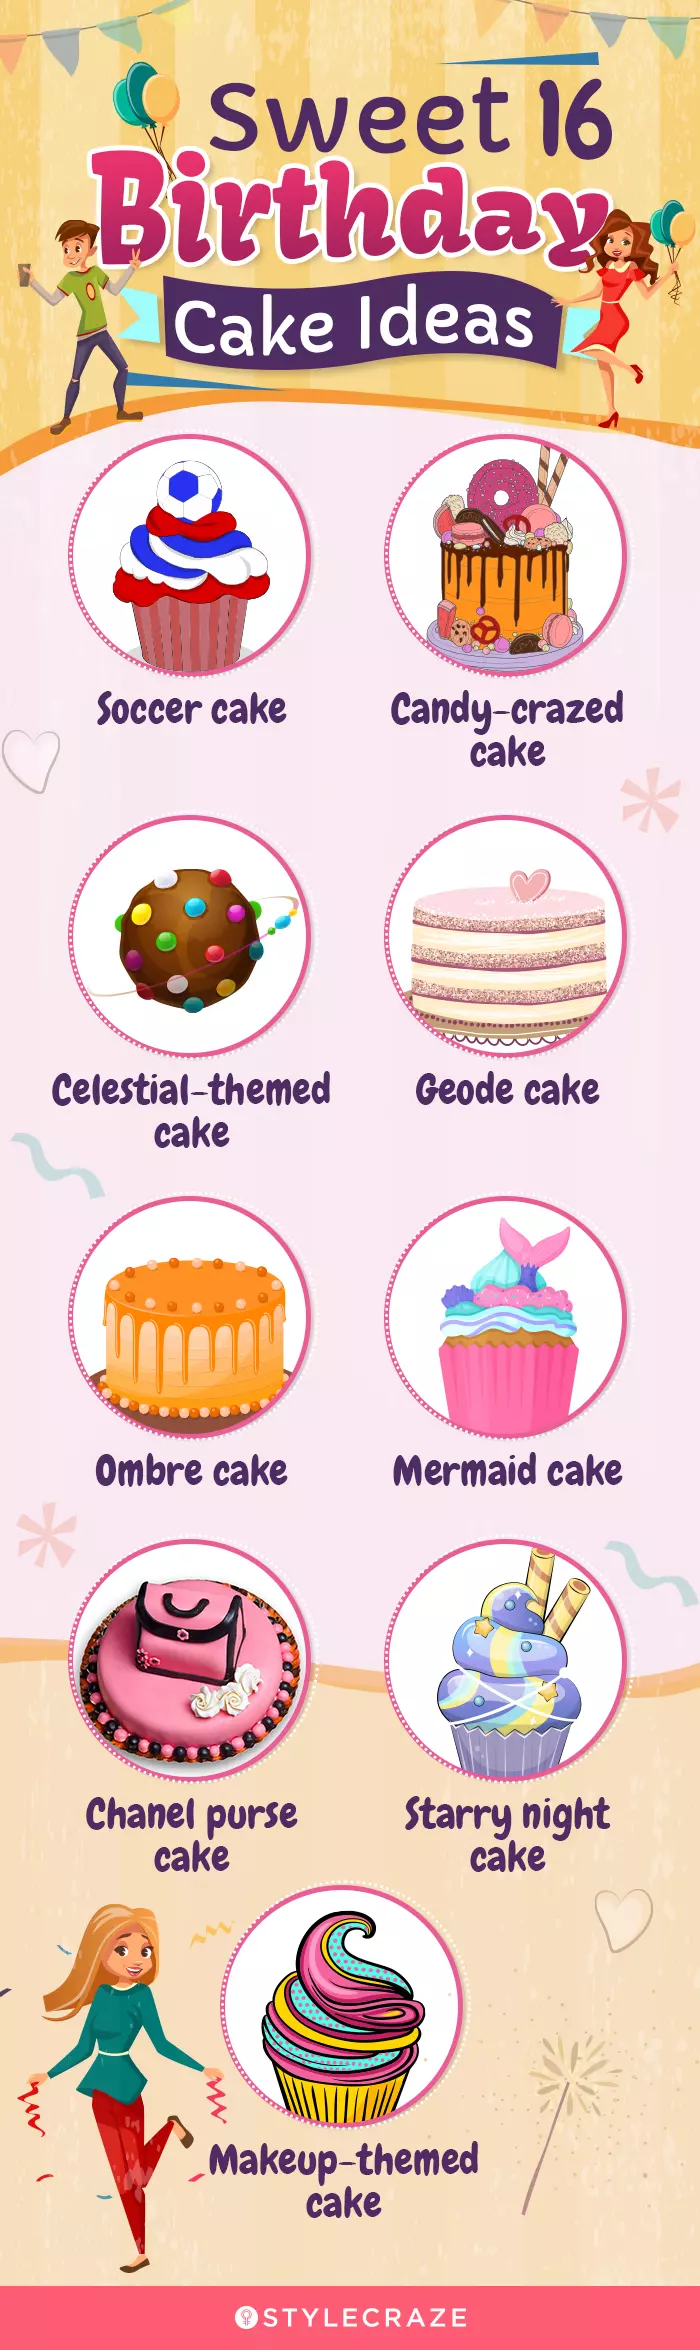 sweet 16 birthday cake ideas (infographic)